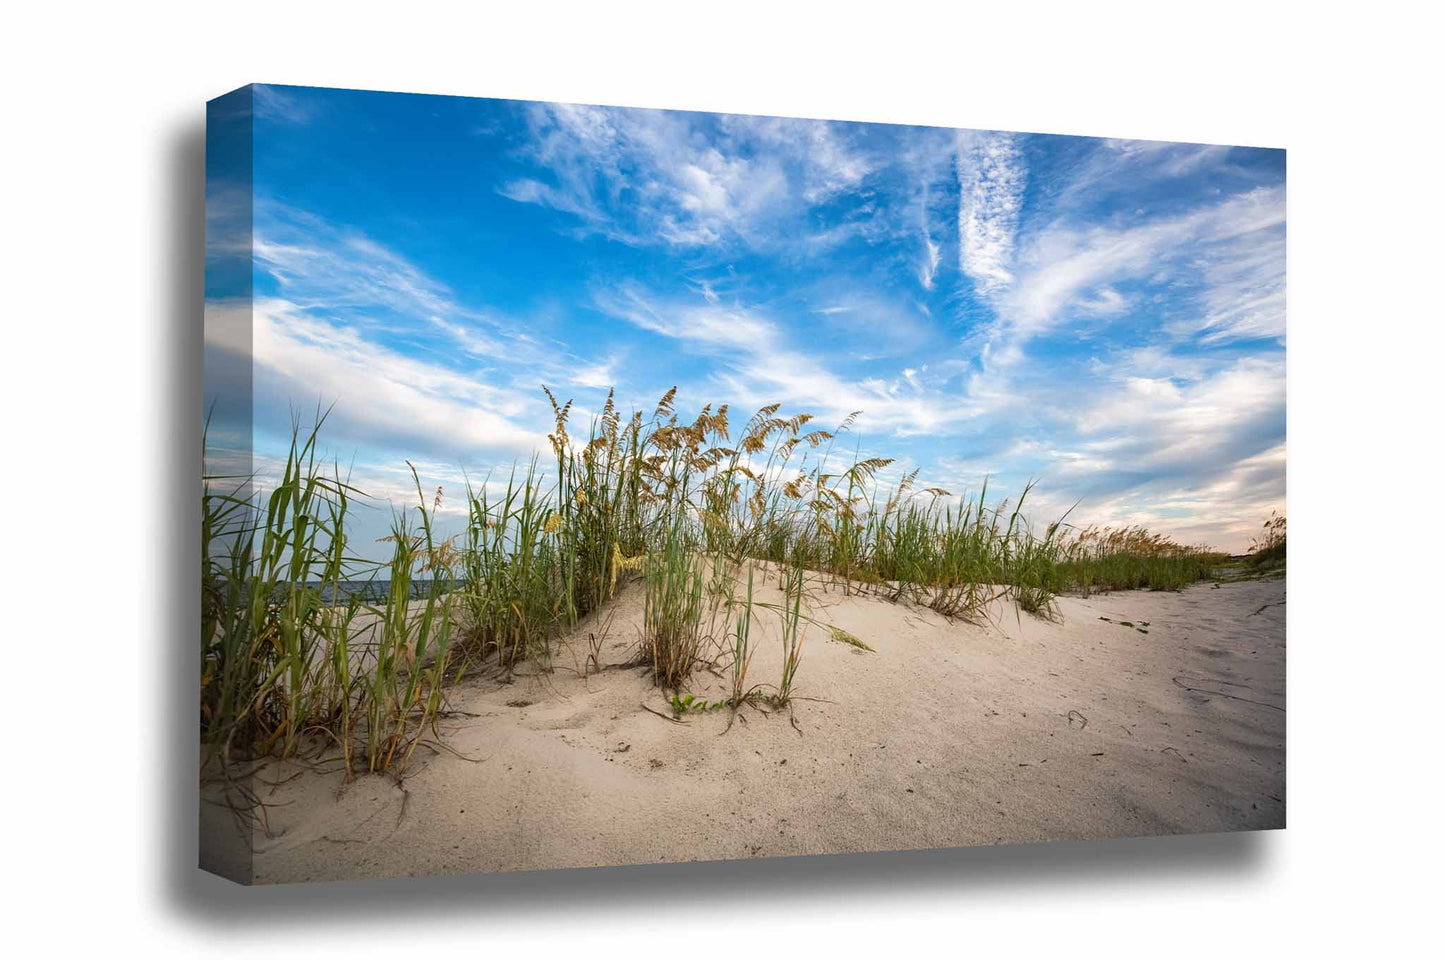 Coastal canvas wall art of sand dunes and sea oats under a big blue sky along a beach on Hilton Head Island, South Carolina by Sean Ramsey of Southern Plains Photography.